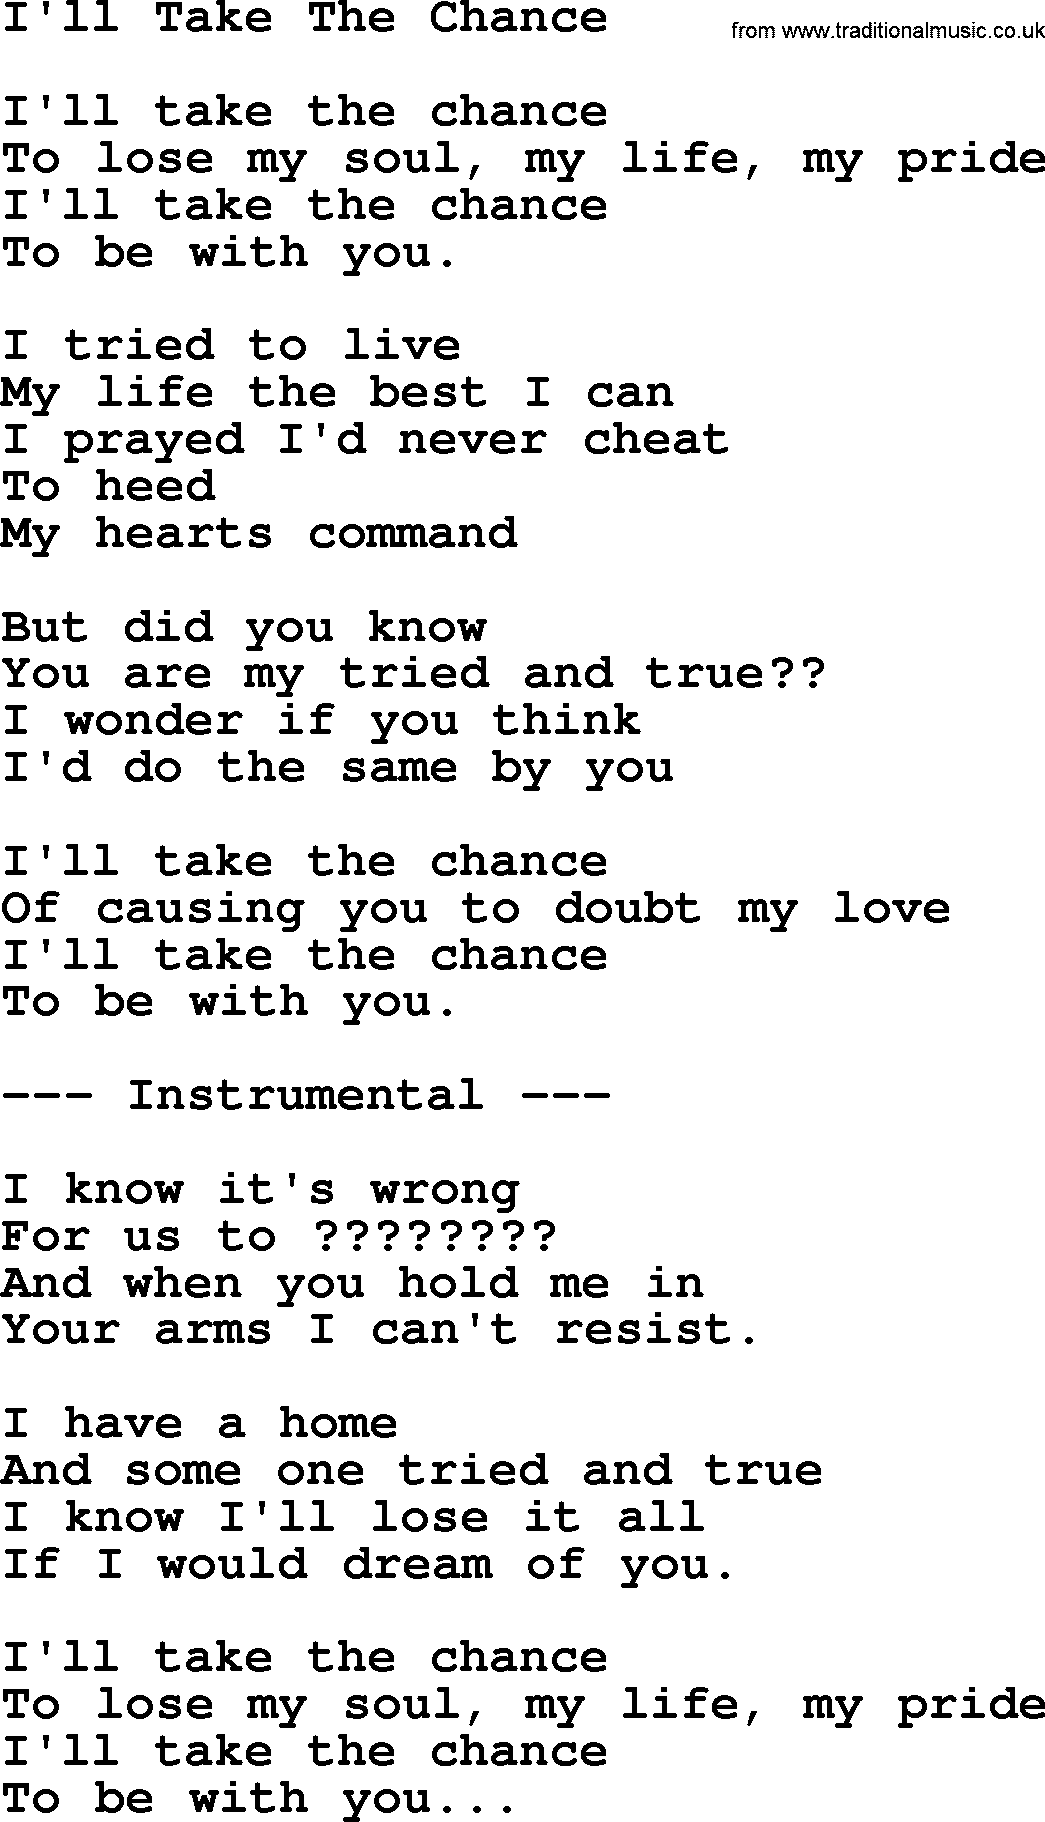 George Jones song: I'll Take The Chance, lyrics